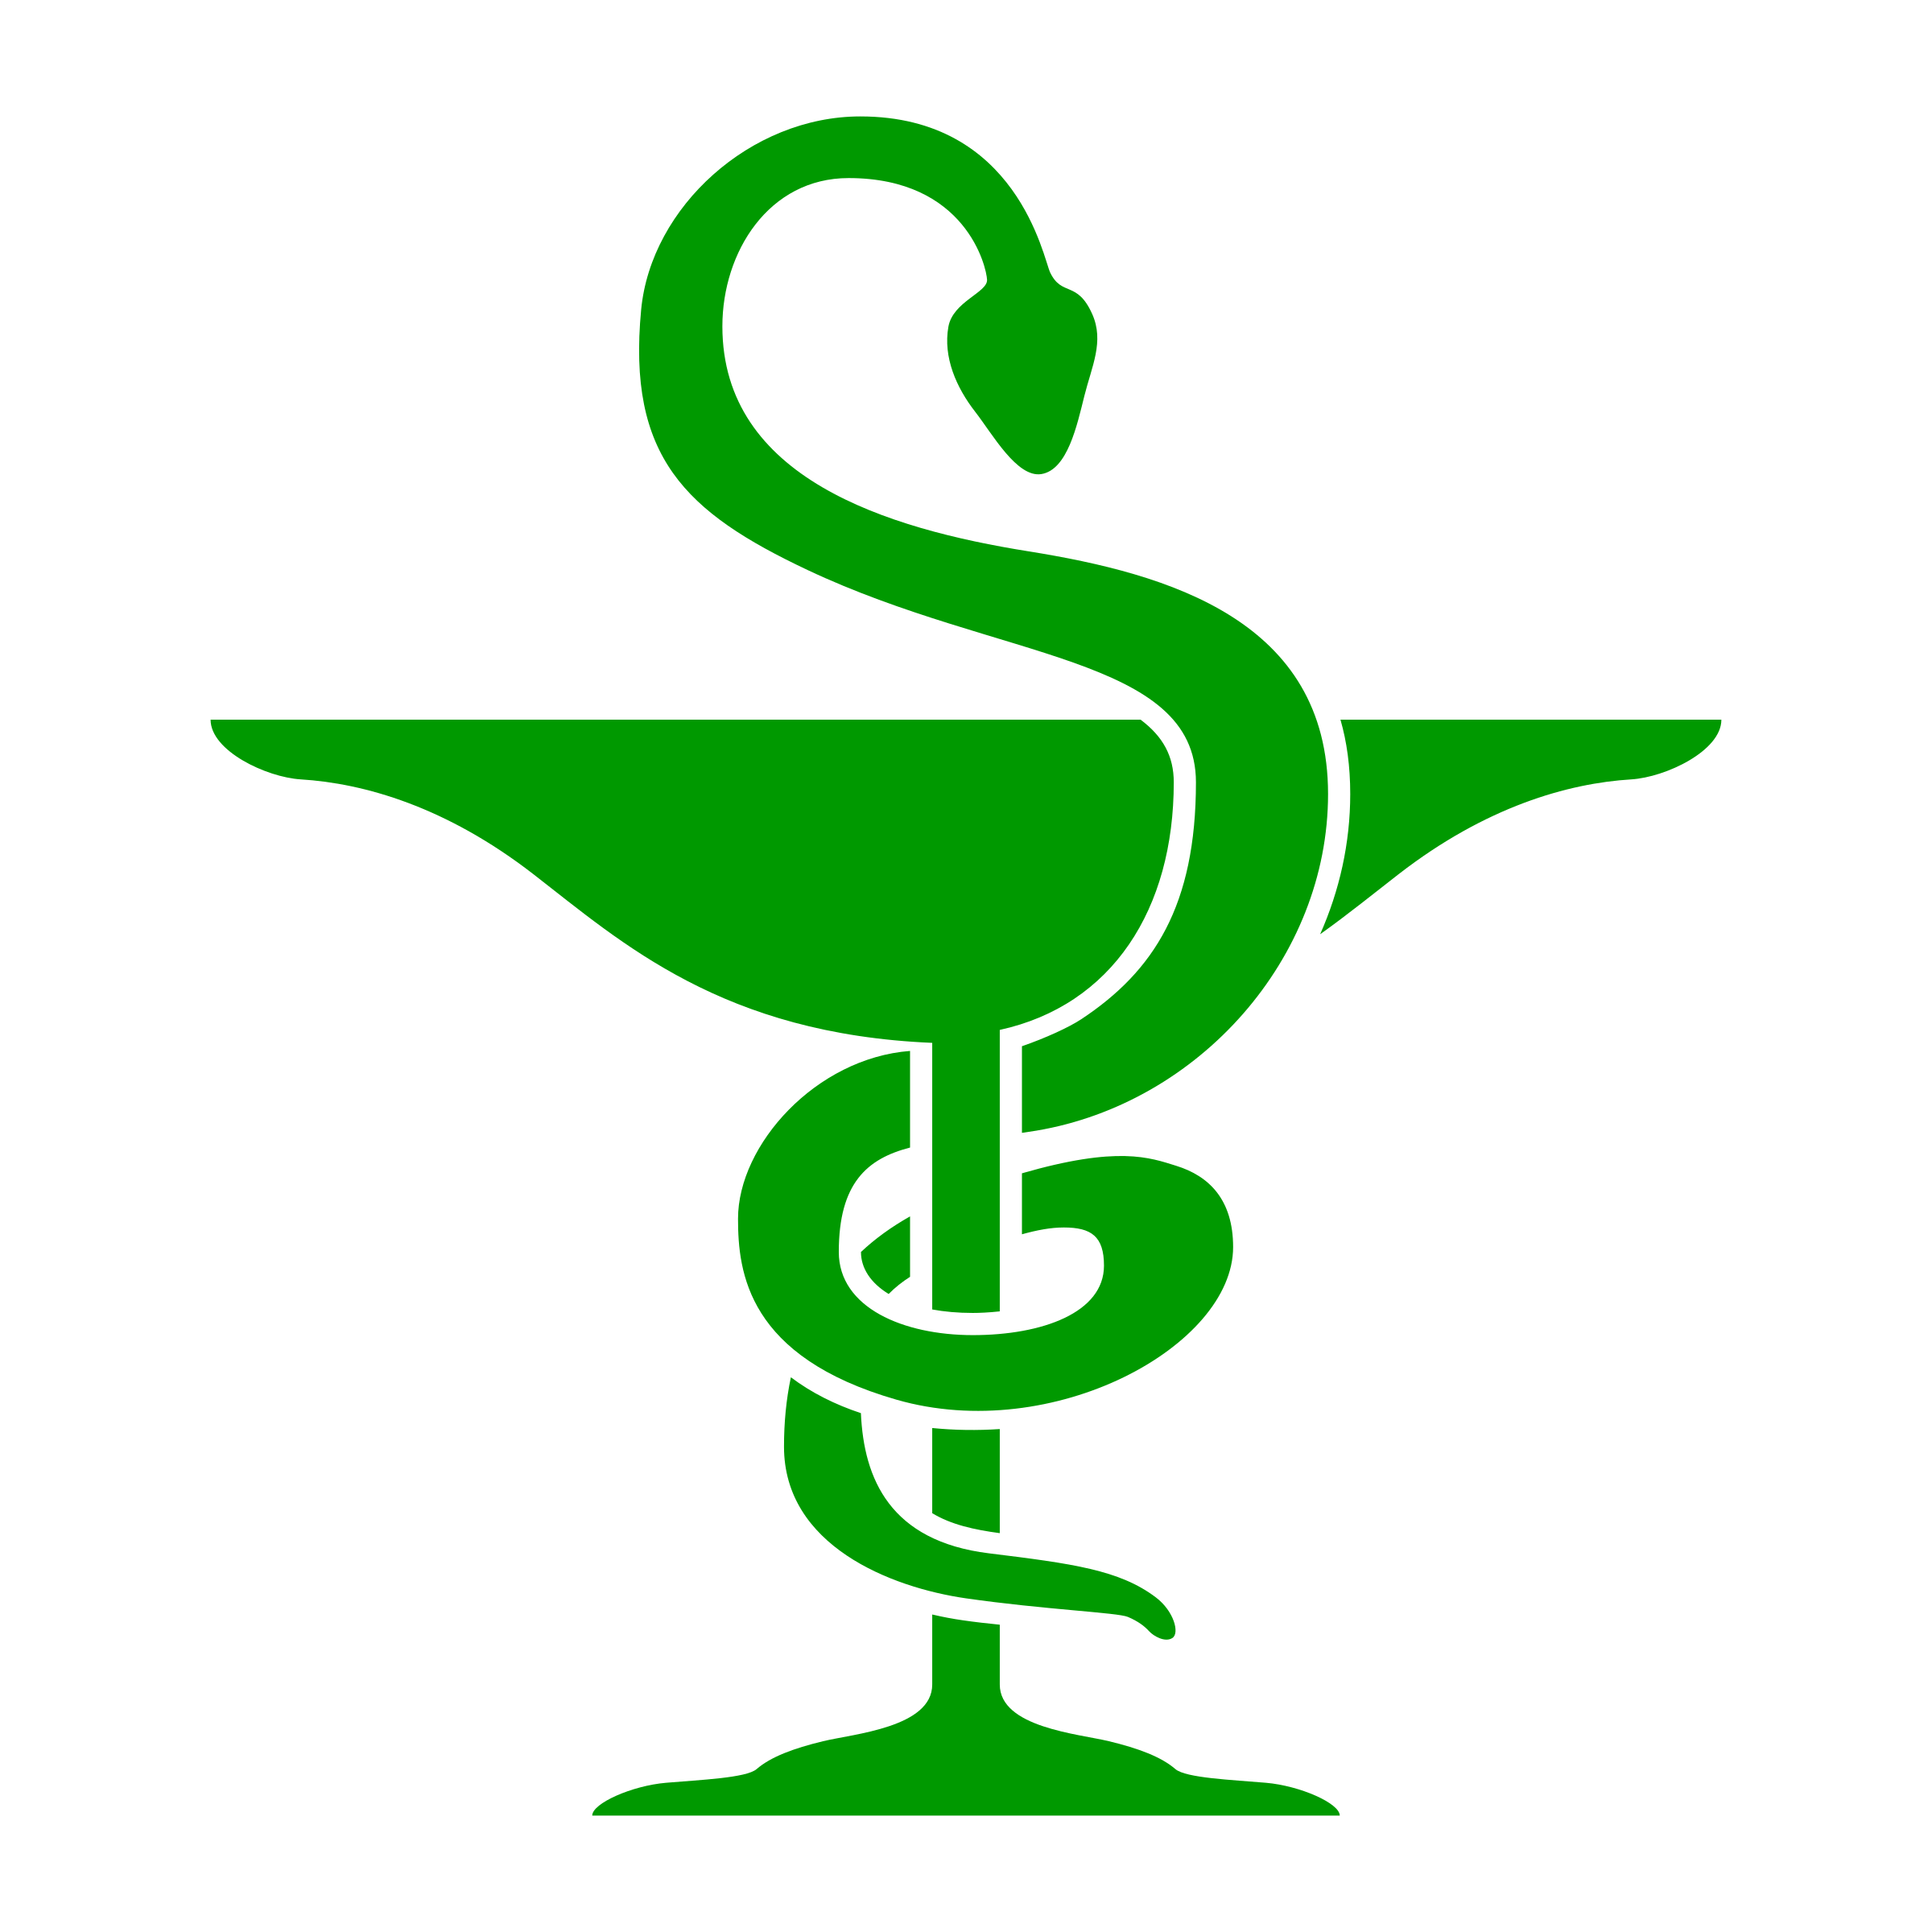 Медицина символ. Чаша Гигиеи. Чаша Гигеи символ. Символ медицины чаша со змеей. Медицинская змея с чашей вектор.